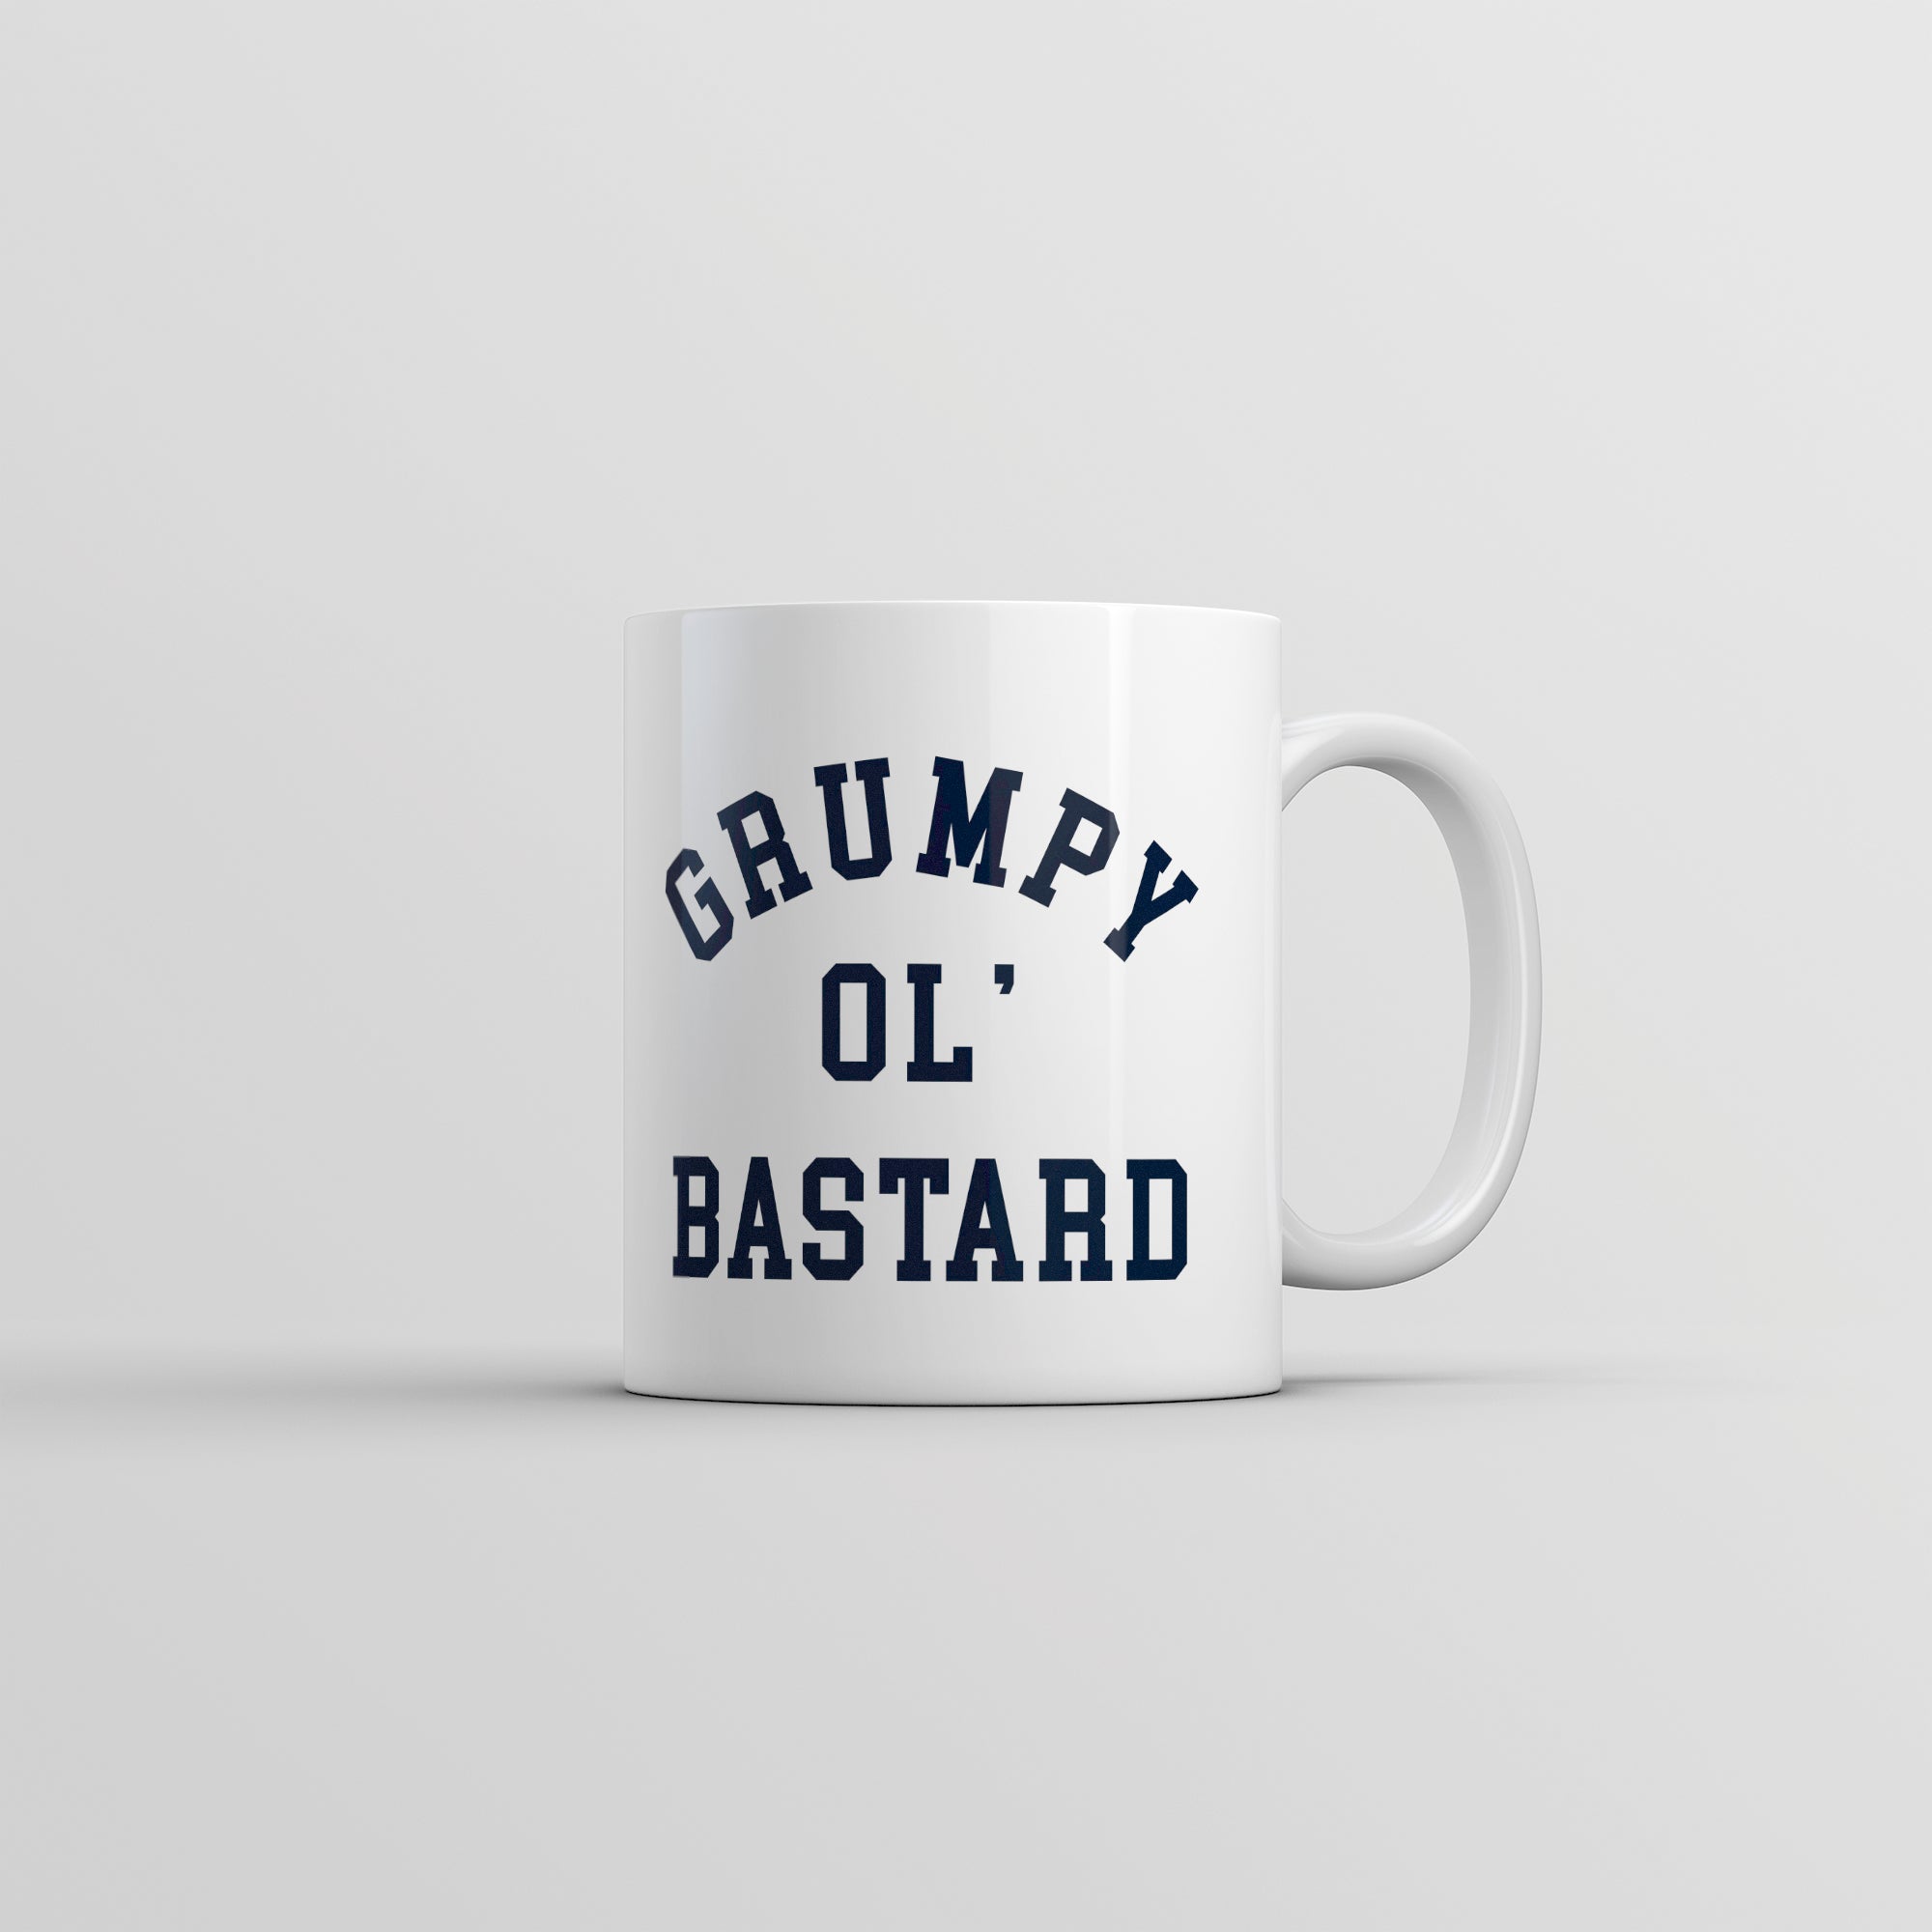 Funny White Grumpy Ol Bastard Coffee Mug Nerdy Sarcastic Tee